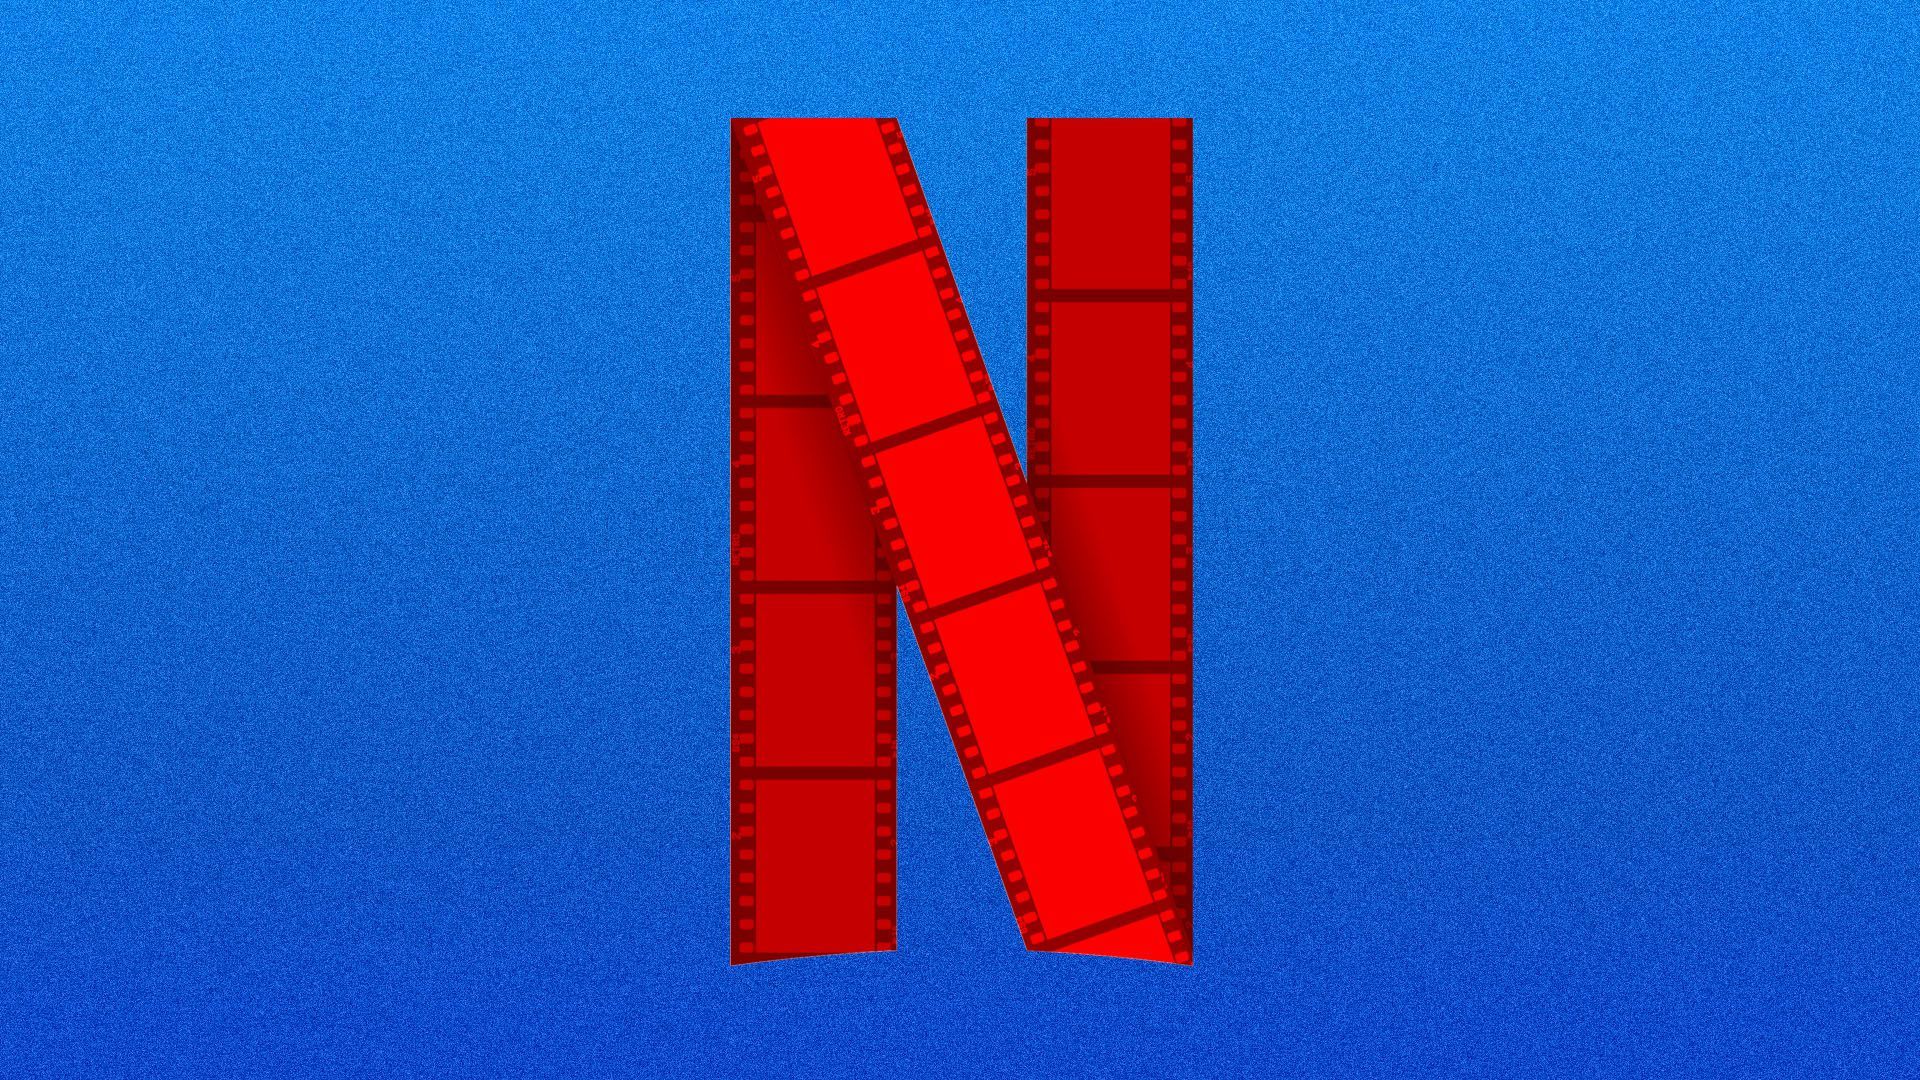 Illustration of Netflix logo made of film reel